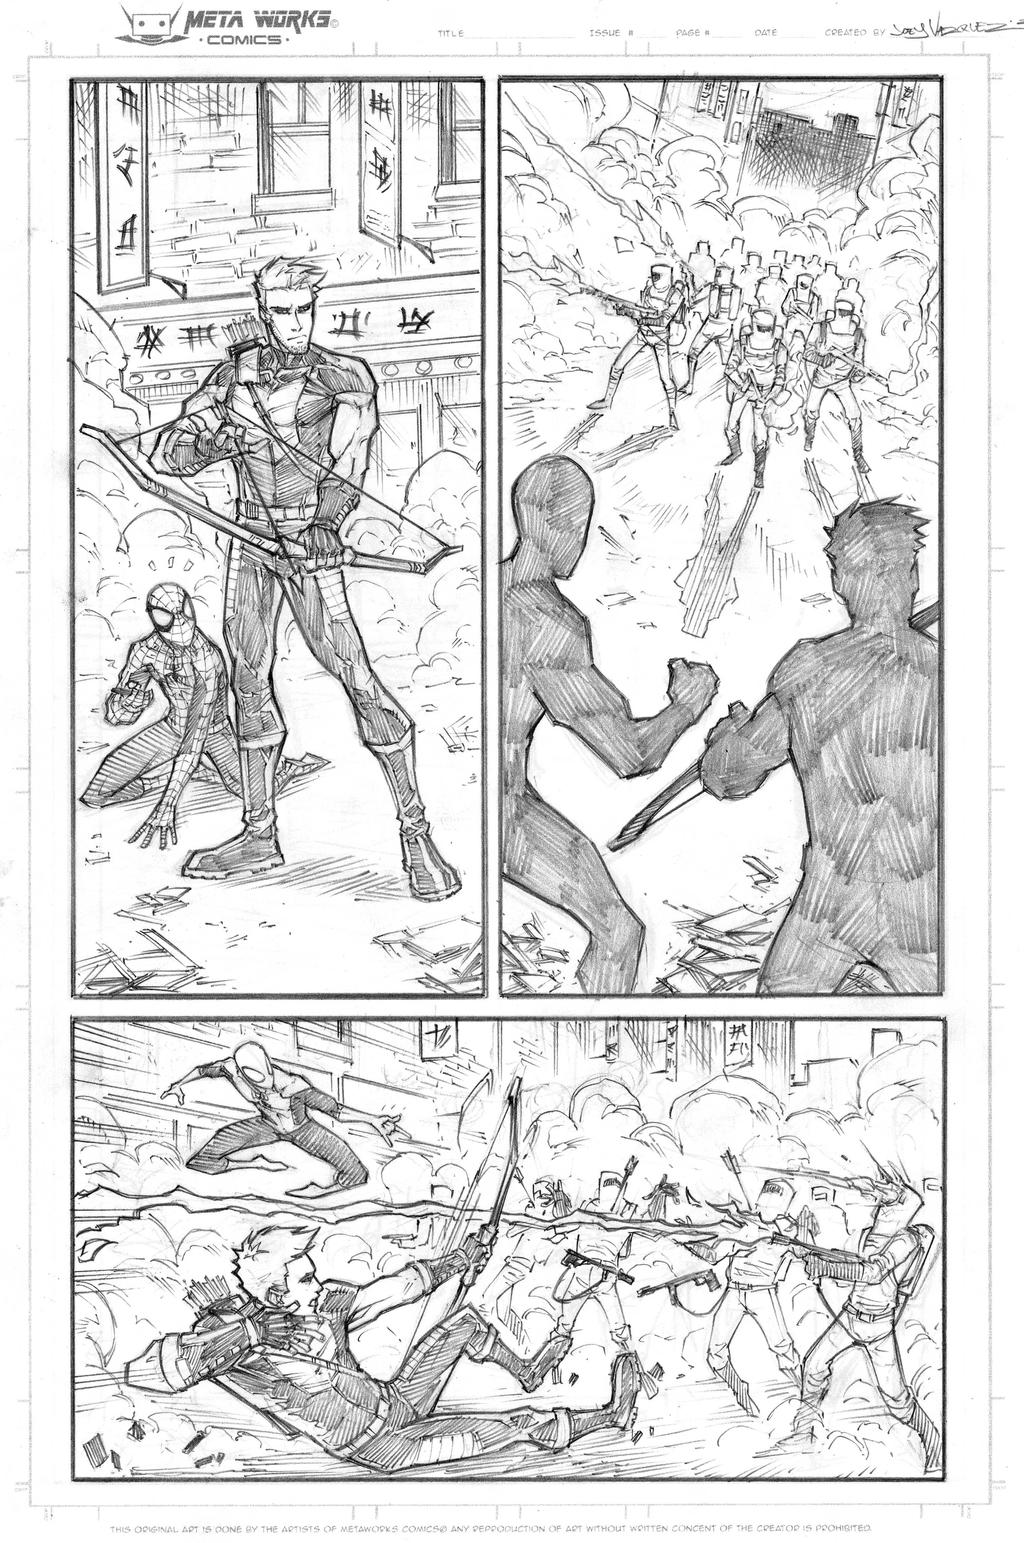 Marvel spidey sample page 2 pencils